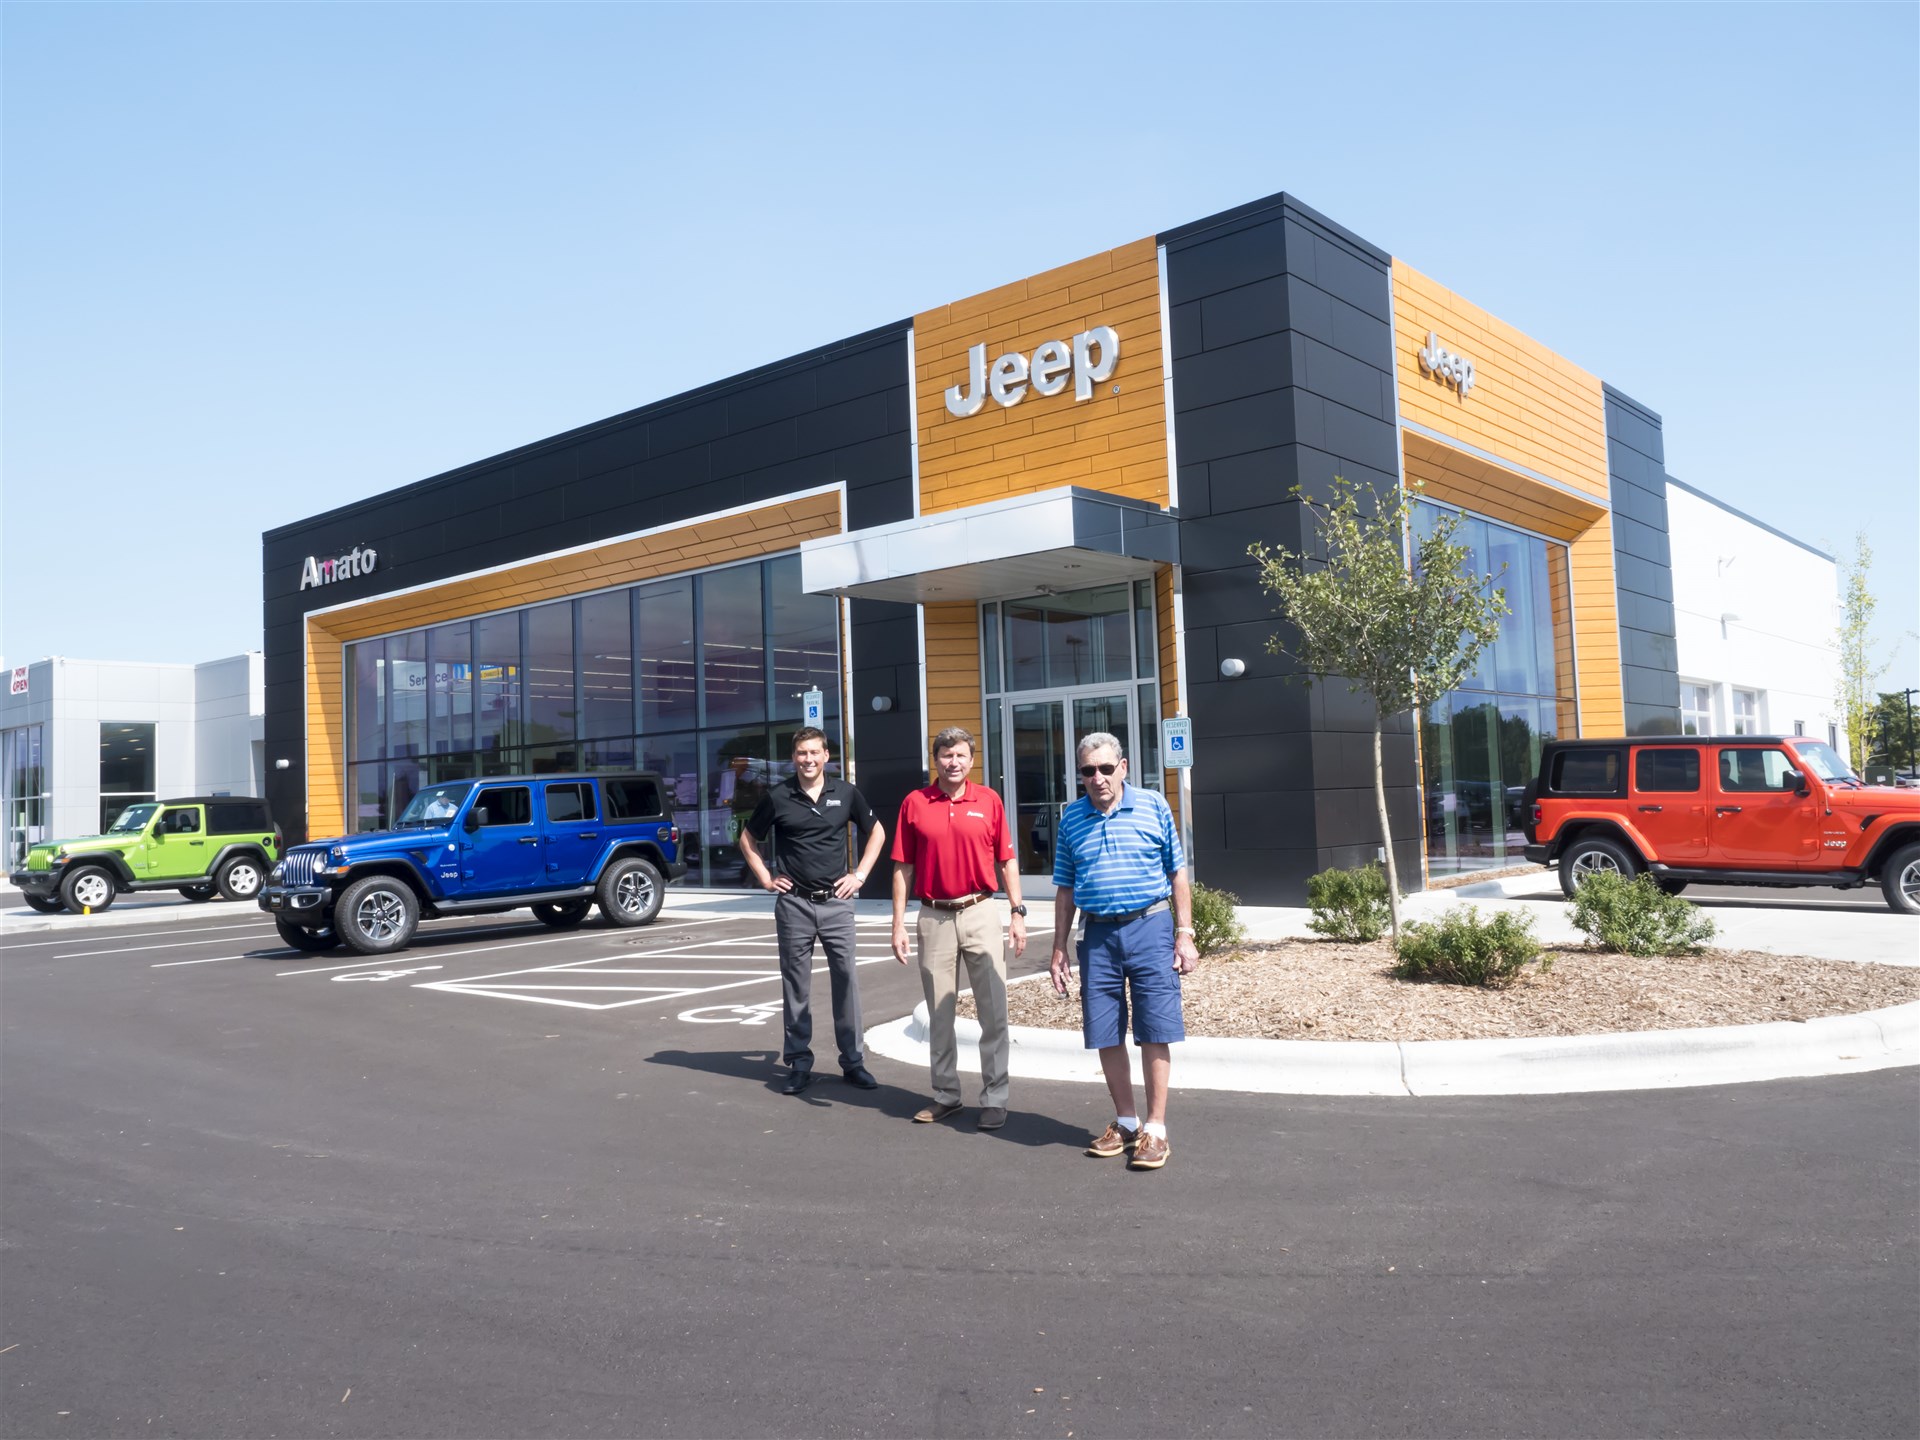 John Amato Chrysler Dodge Jeep Ram